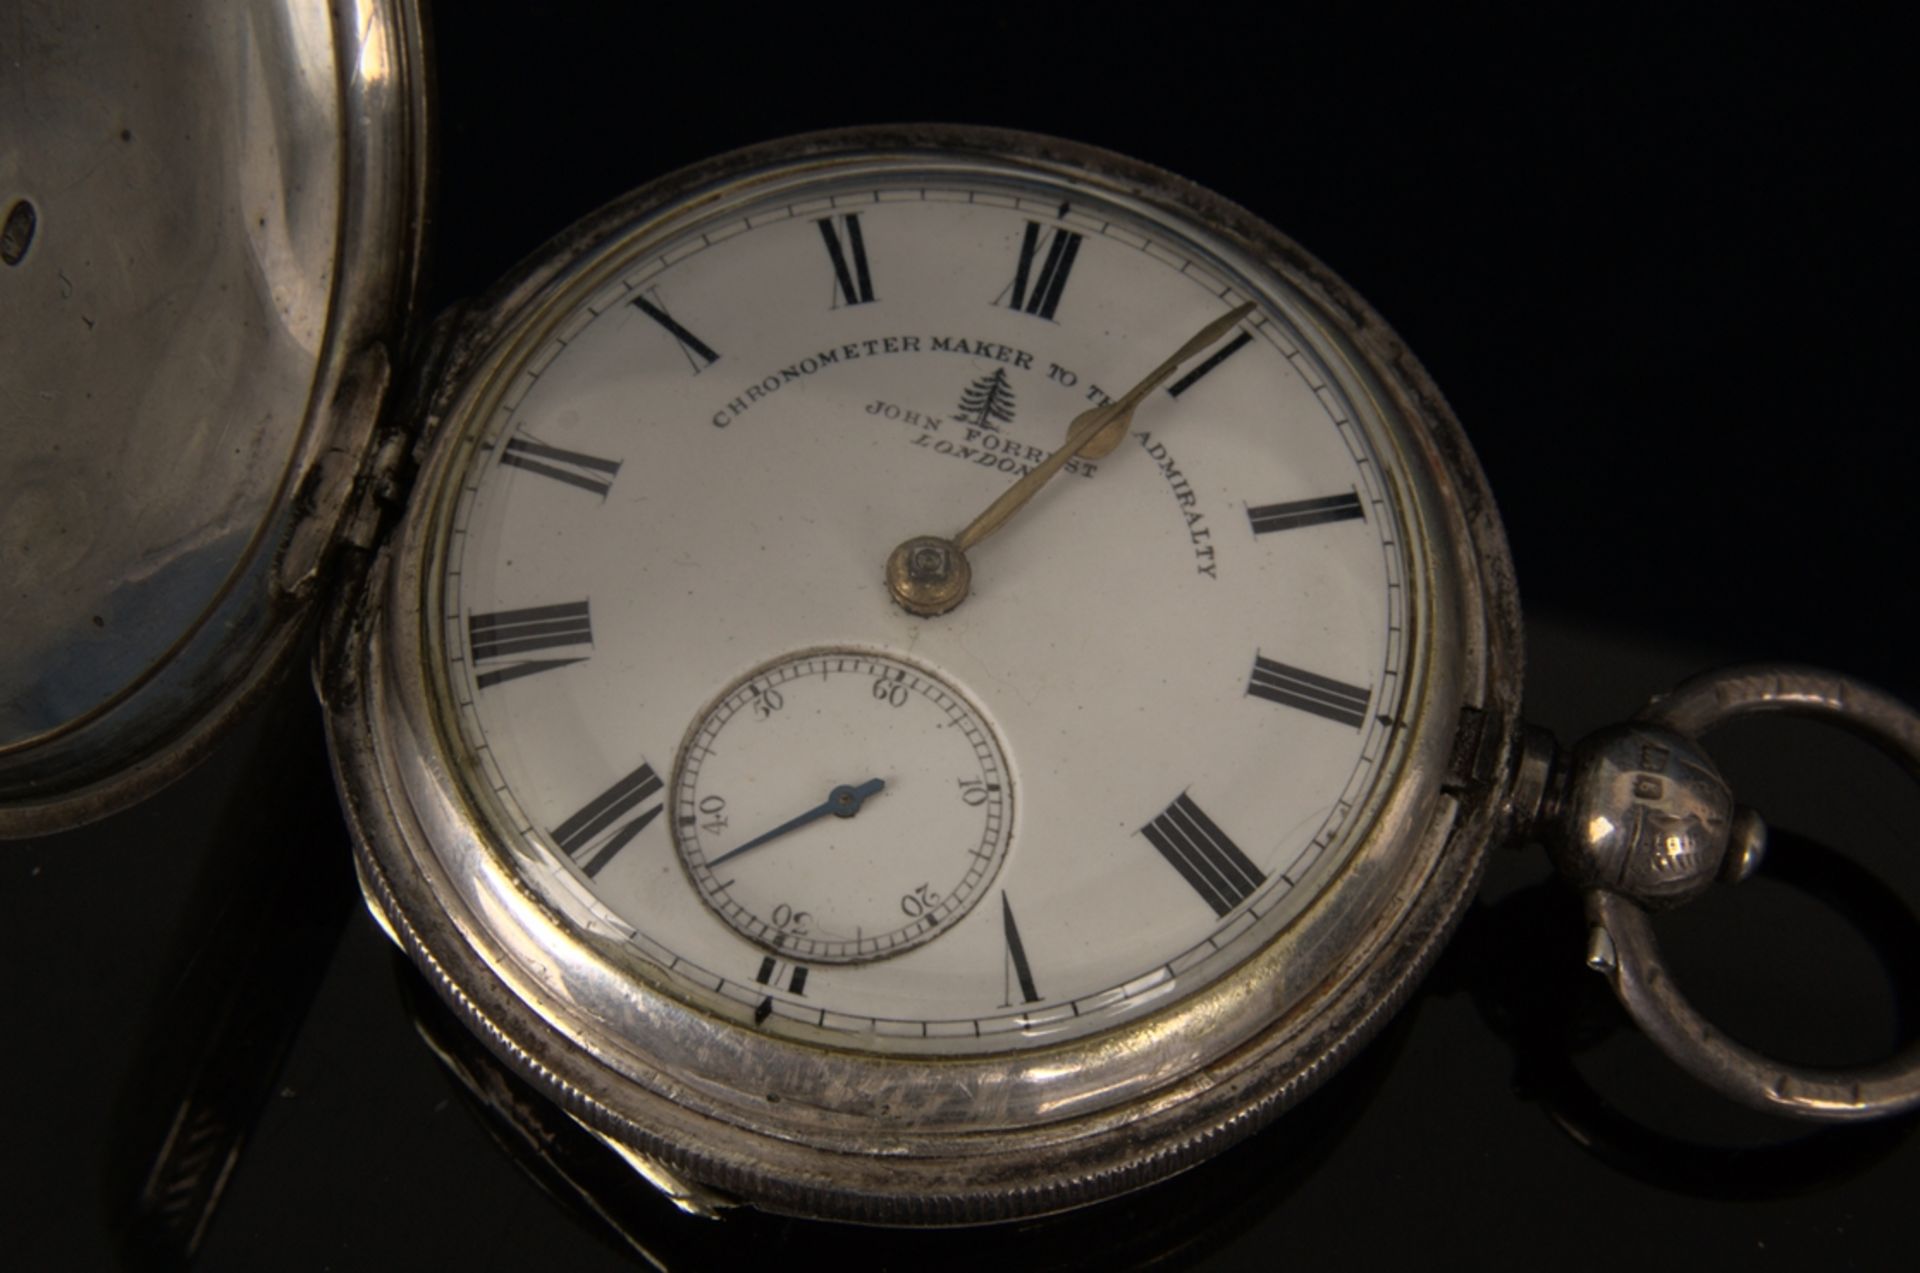 "John Forrest - Chronometermaker to the Admirality - London". Schwere englische Savonette